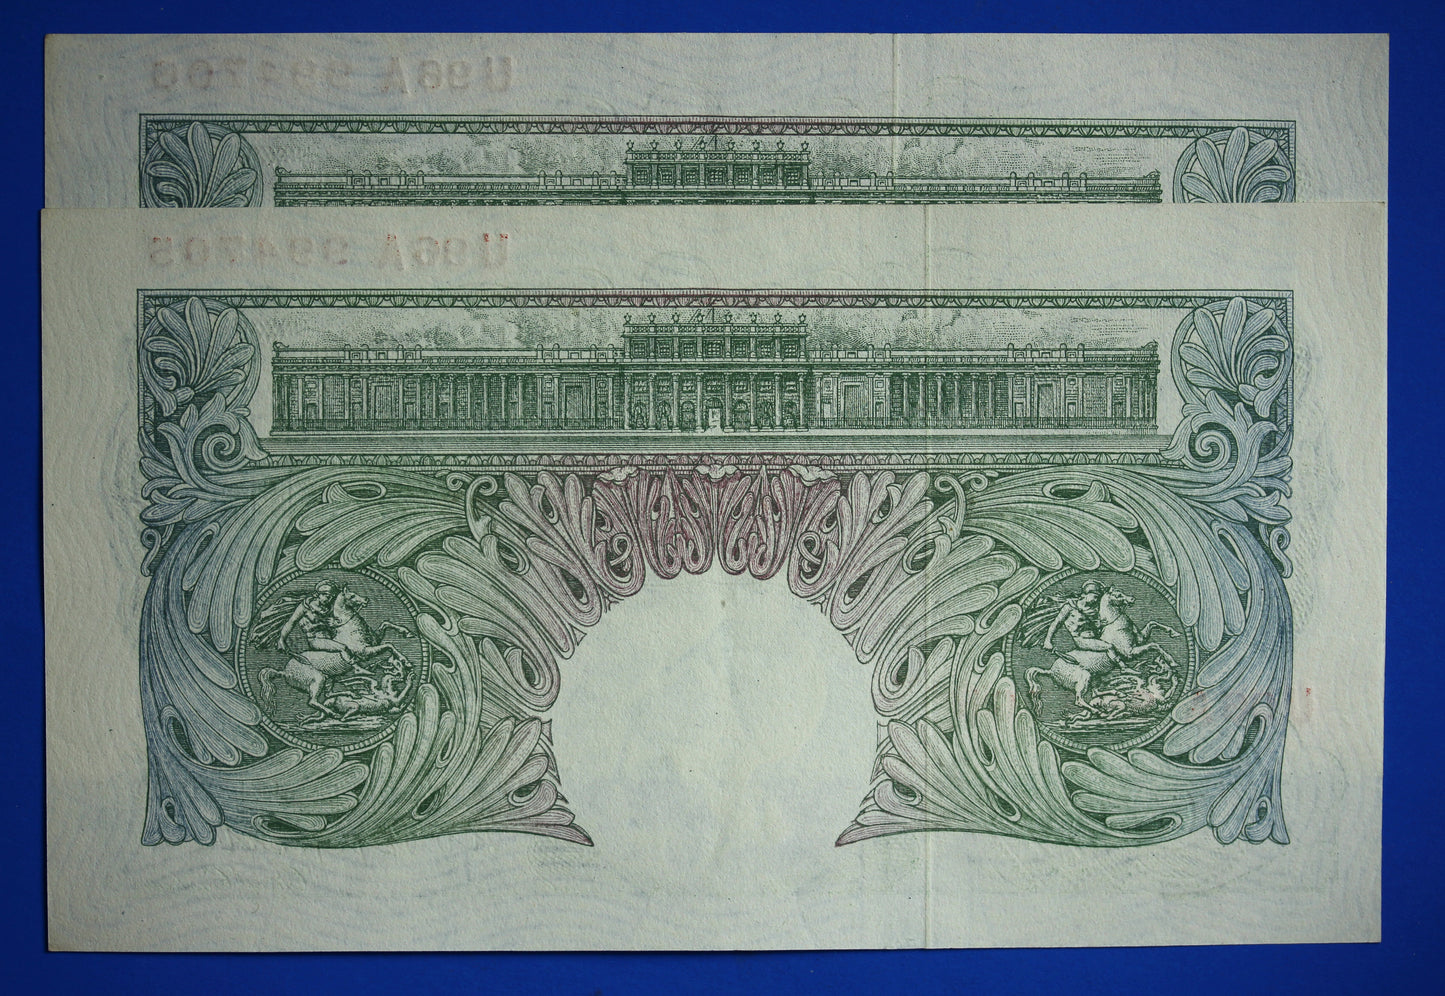 1948 Bank of England One pound £1, Peppiatt "U96A" banknotes CONSECUTIVE [10/23 28090]